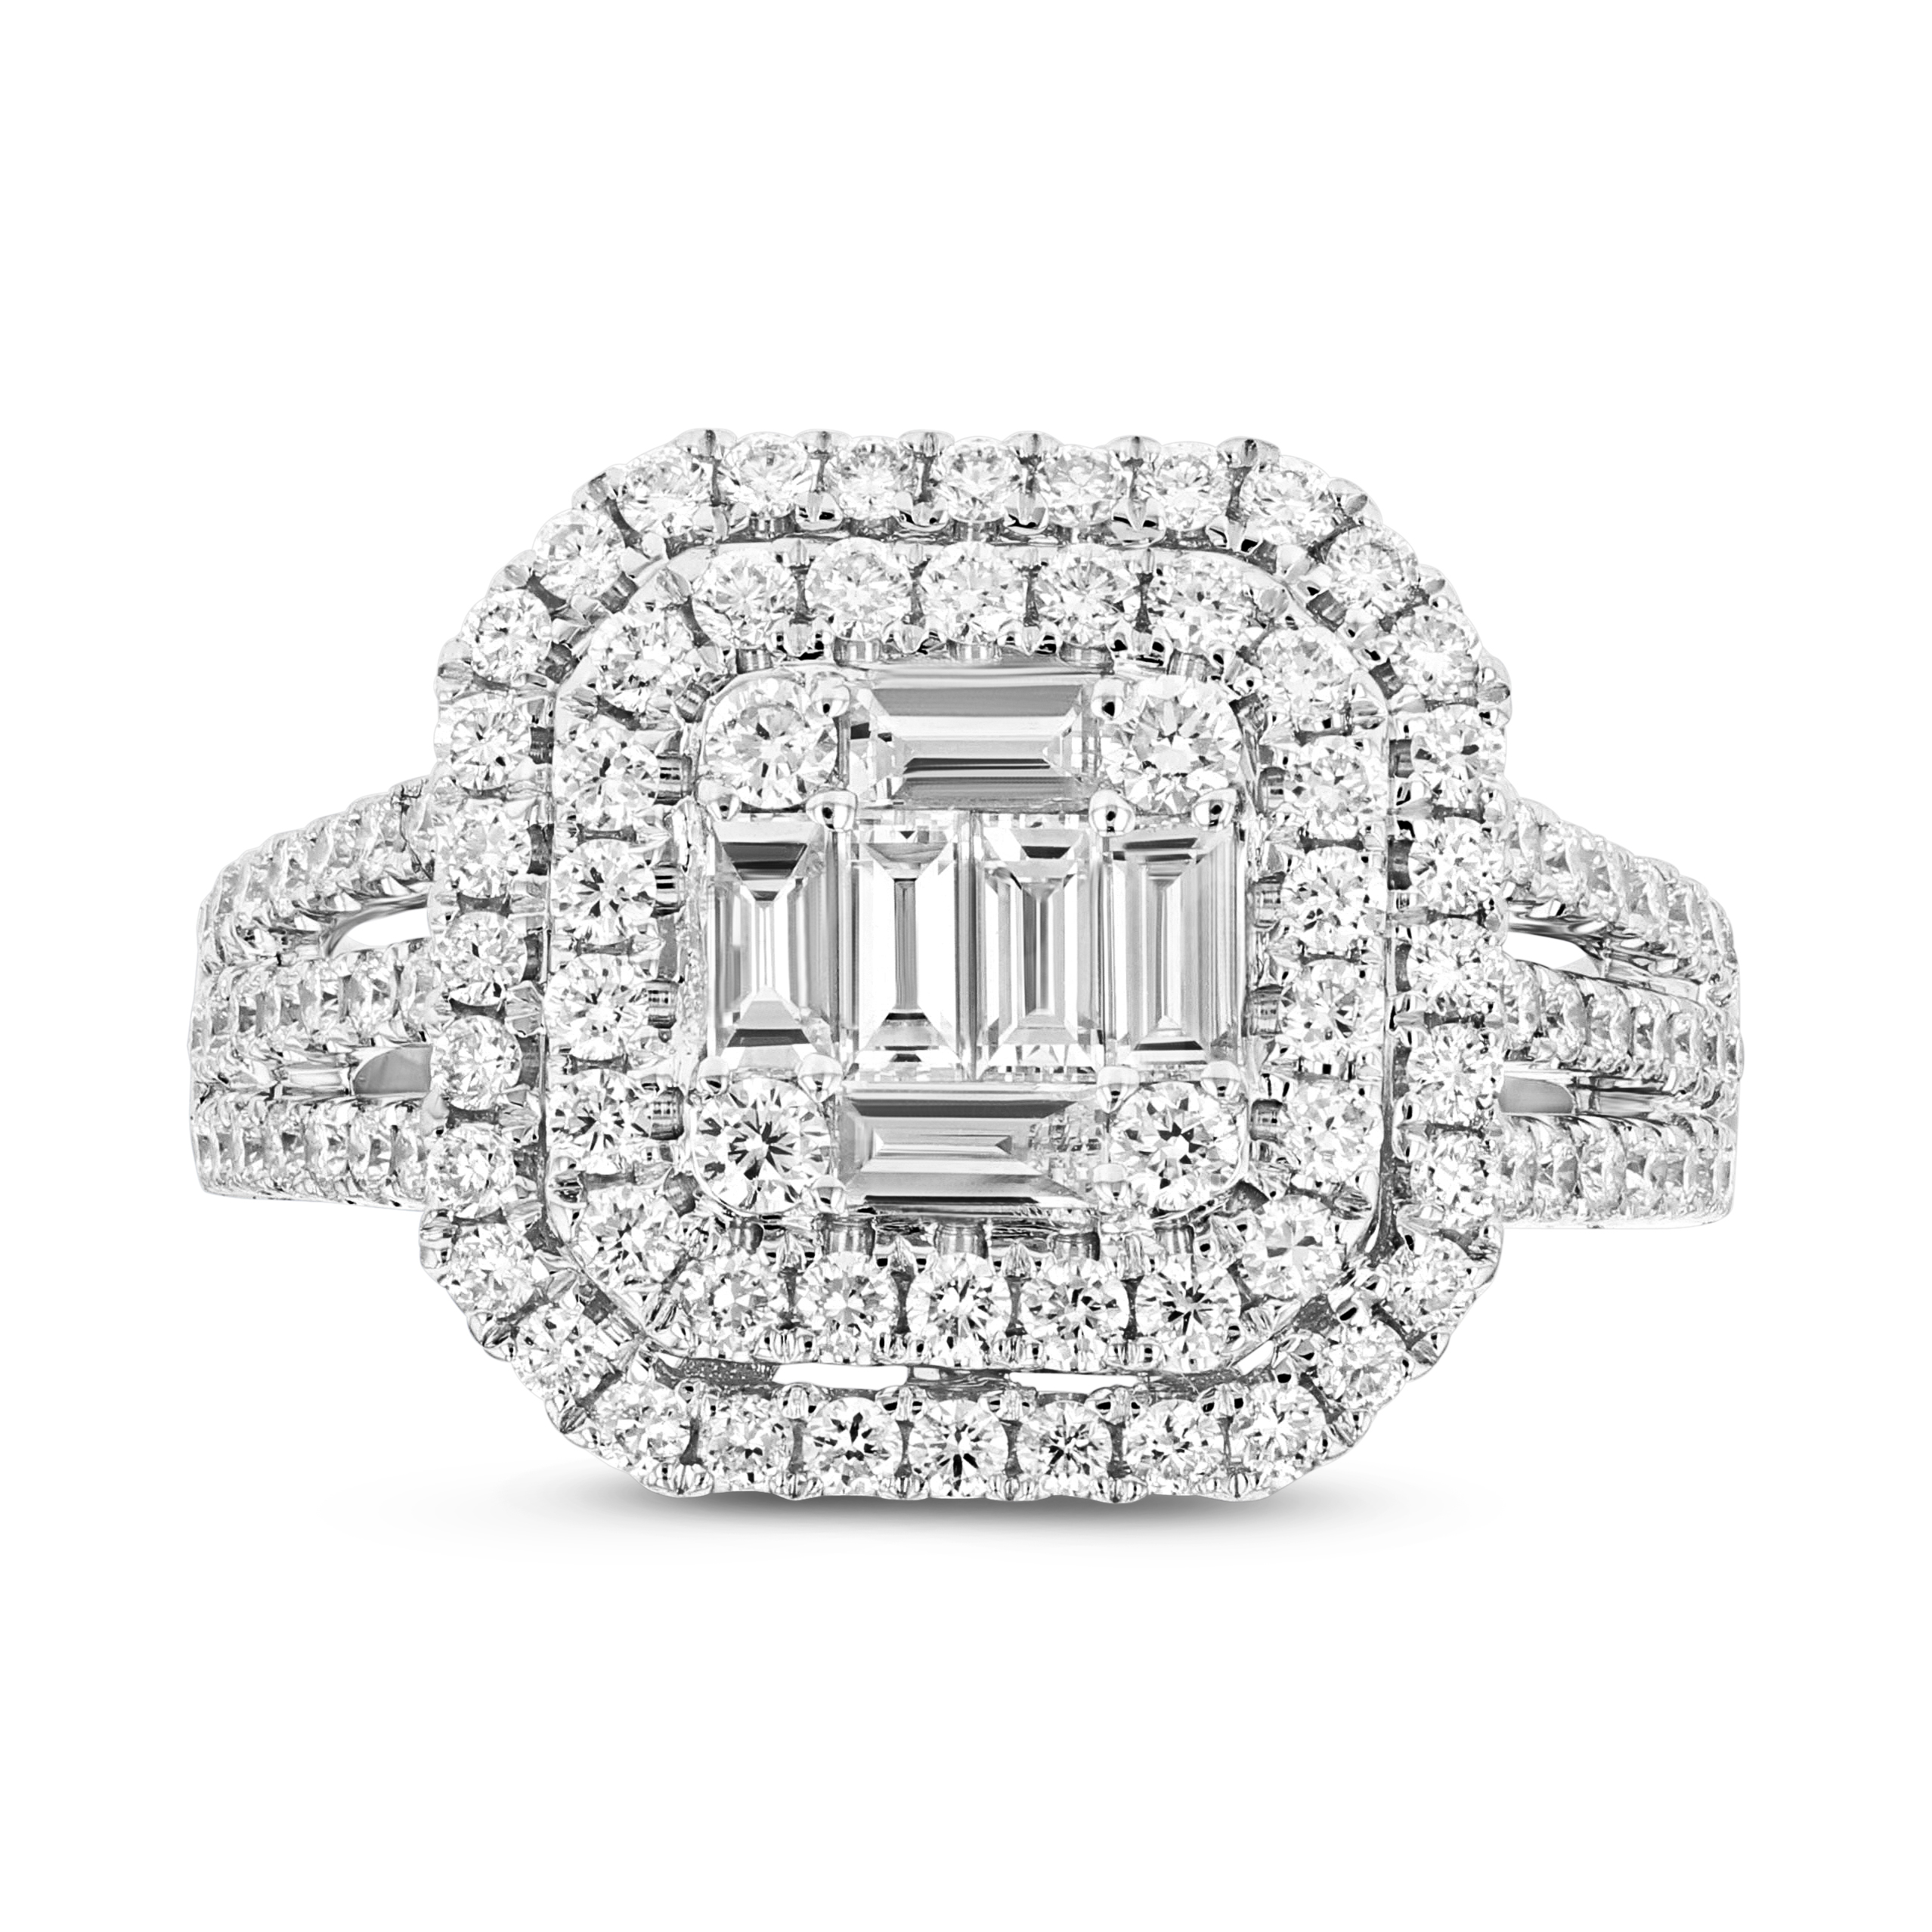 View 1.65ctw Diamond Fashion Ring in 18k White Gold